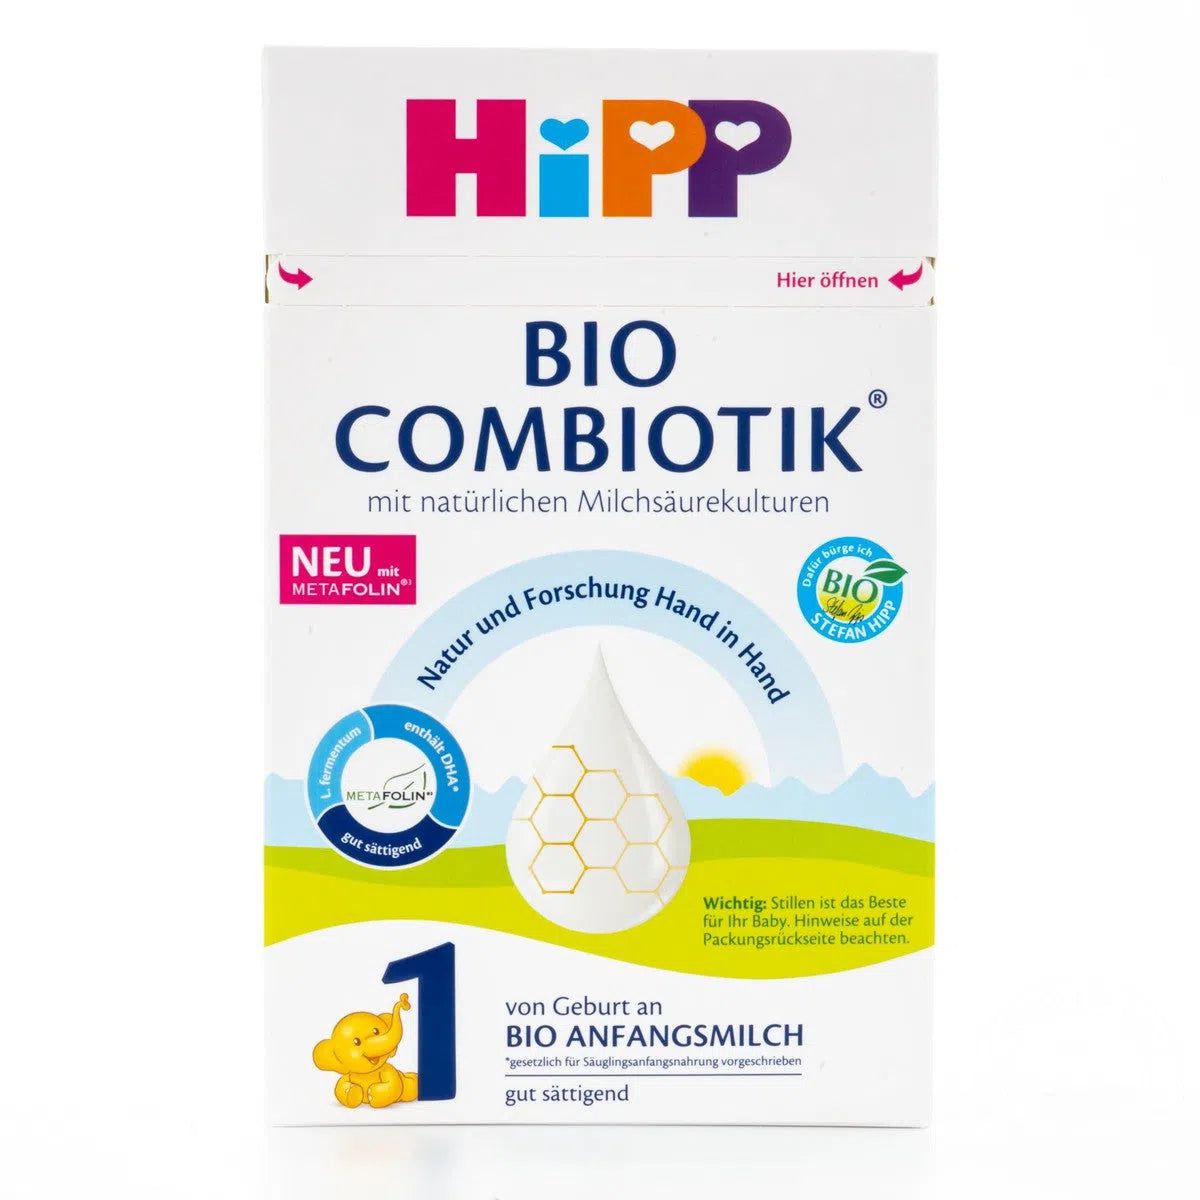 HiPP Stage 1 Organic Combiotic Formula (600g) - German Version - 12 Boxes